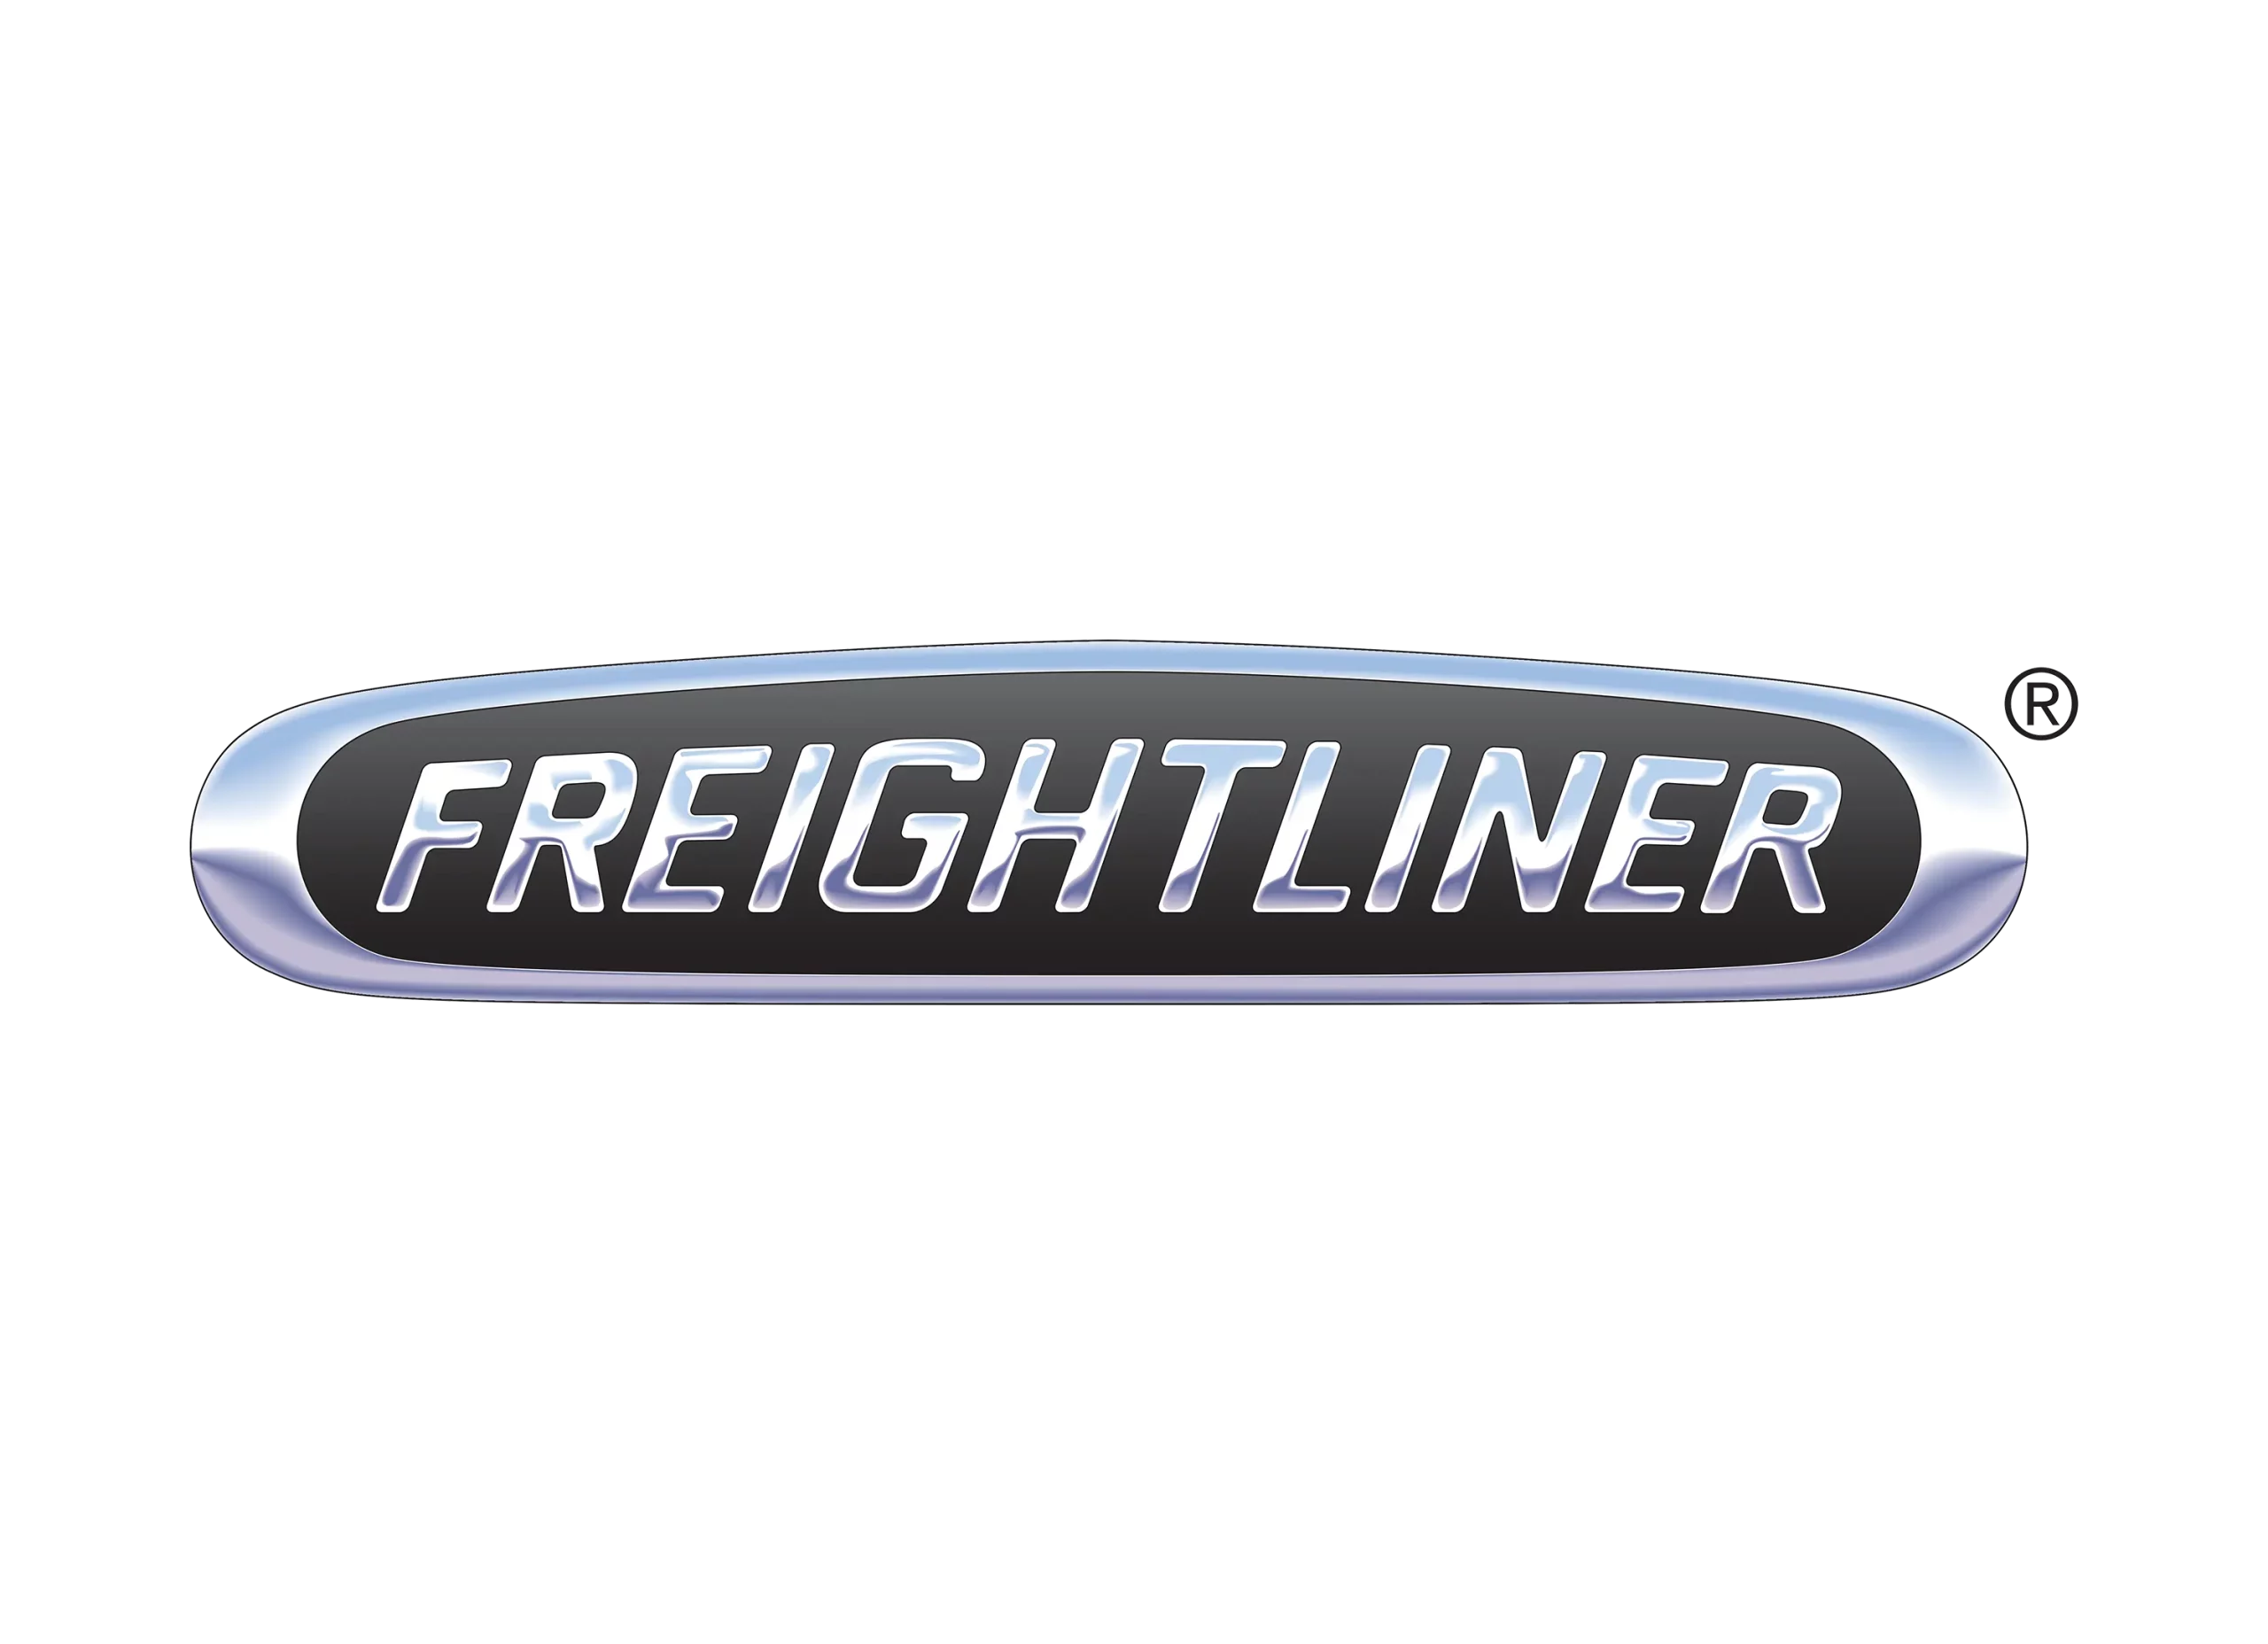 Freightliner logo 1995-present